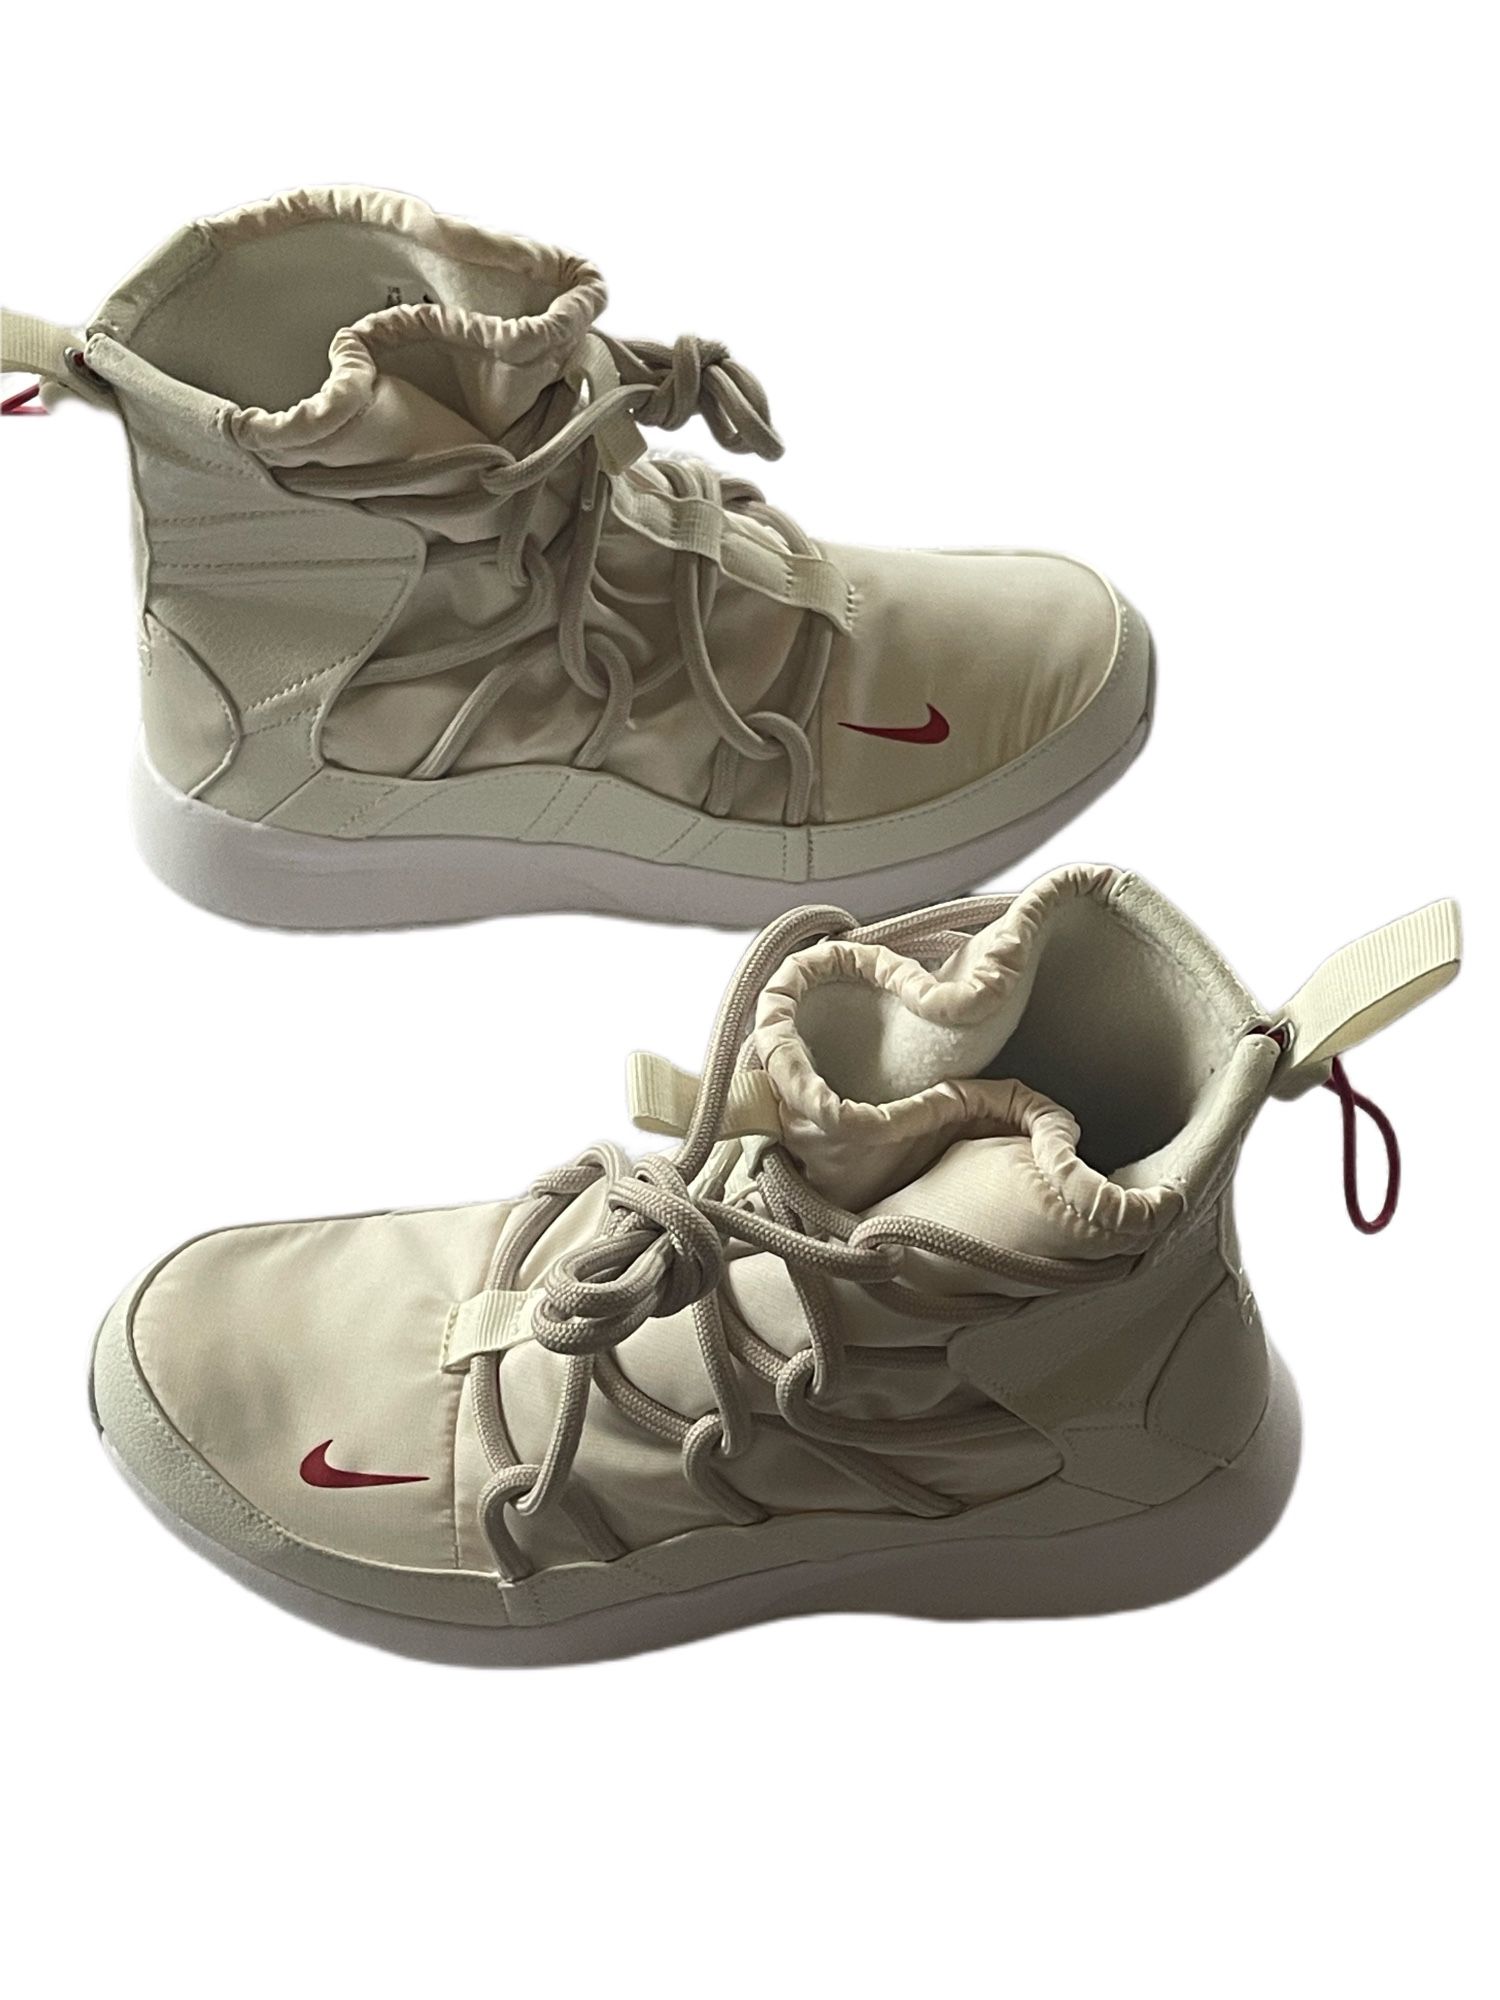 Nike Tanjun High Rise Womens Winter white Snow Boots SZ 8.5